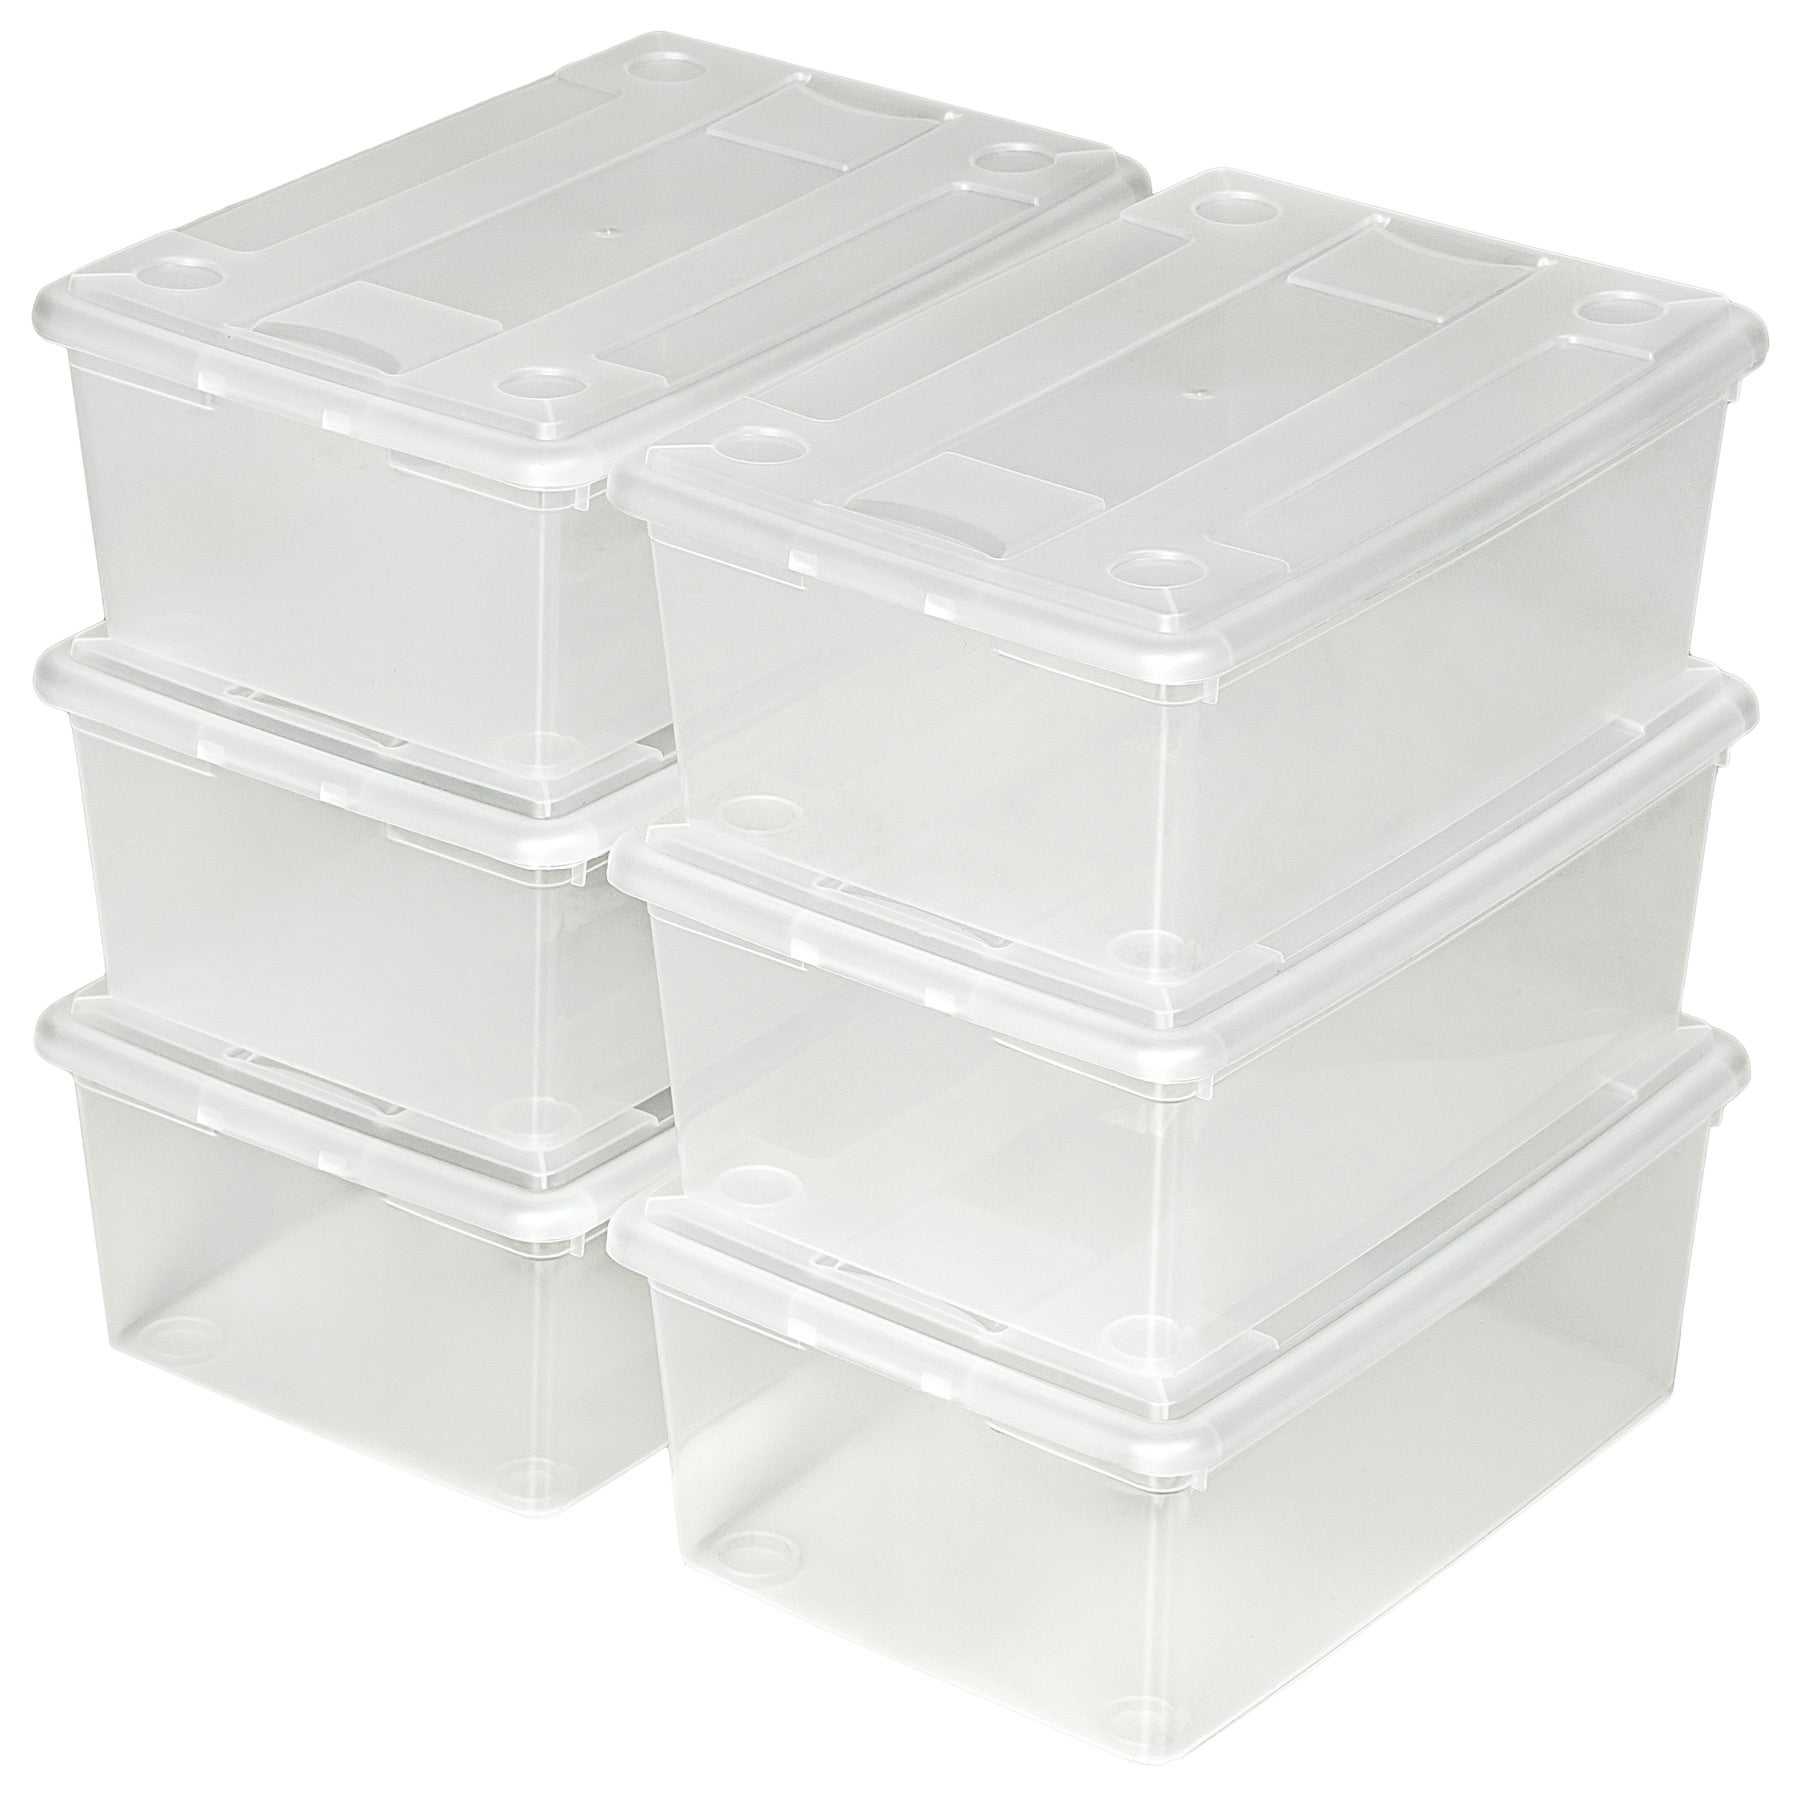 Set de 6 cajas de almacenaje 33x23x12cm - cajas organizadoras con